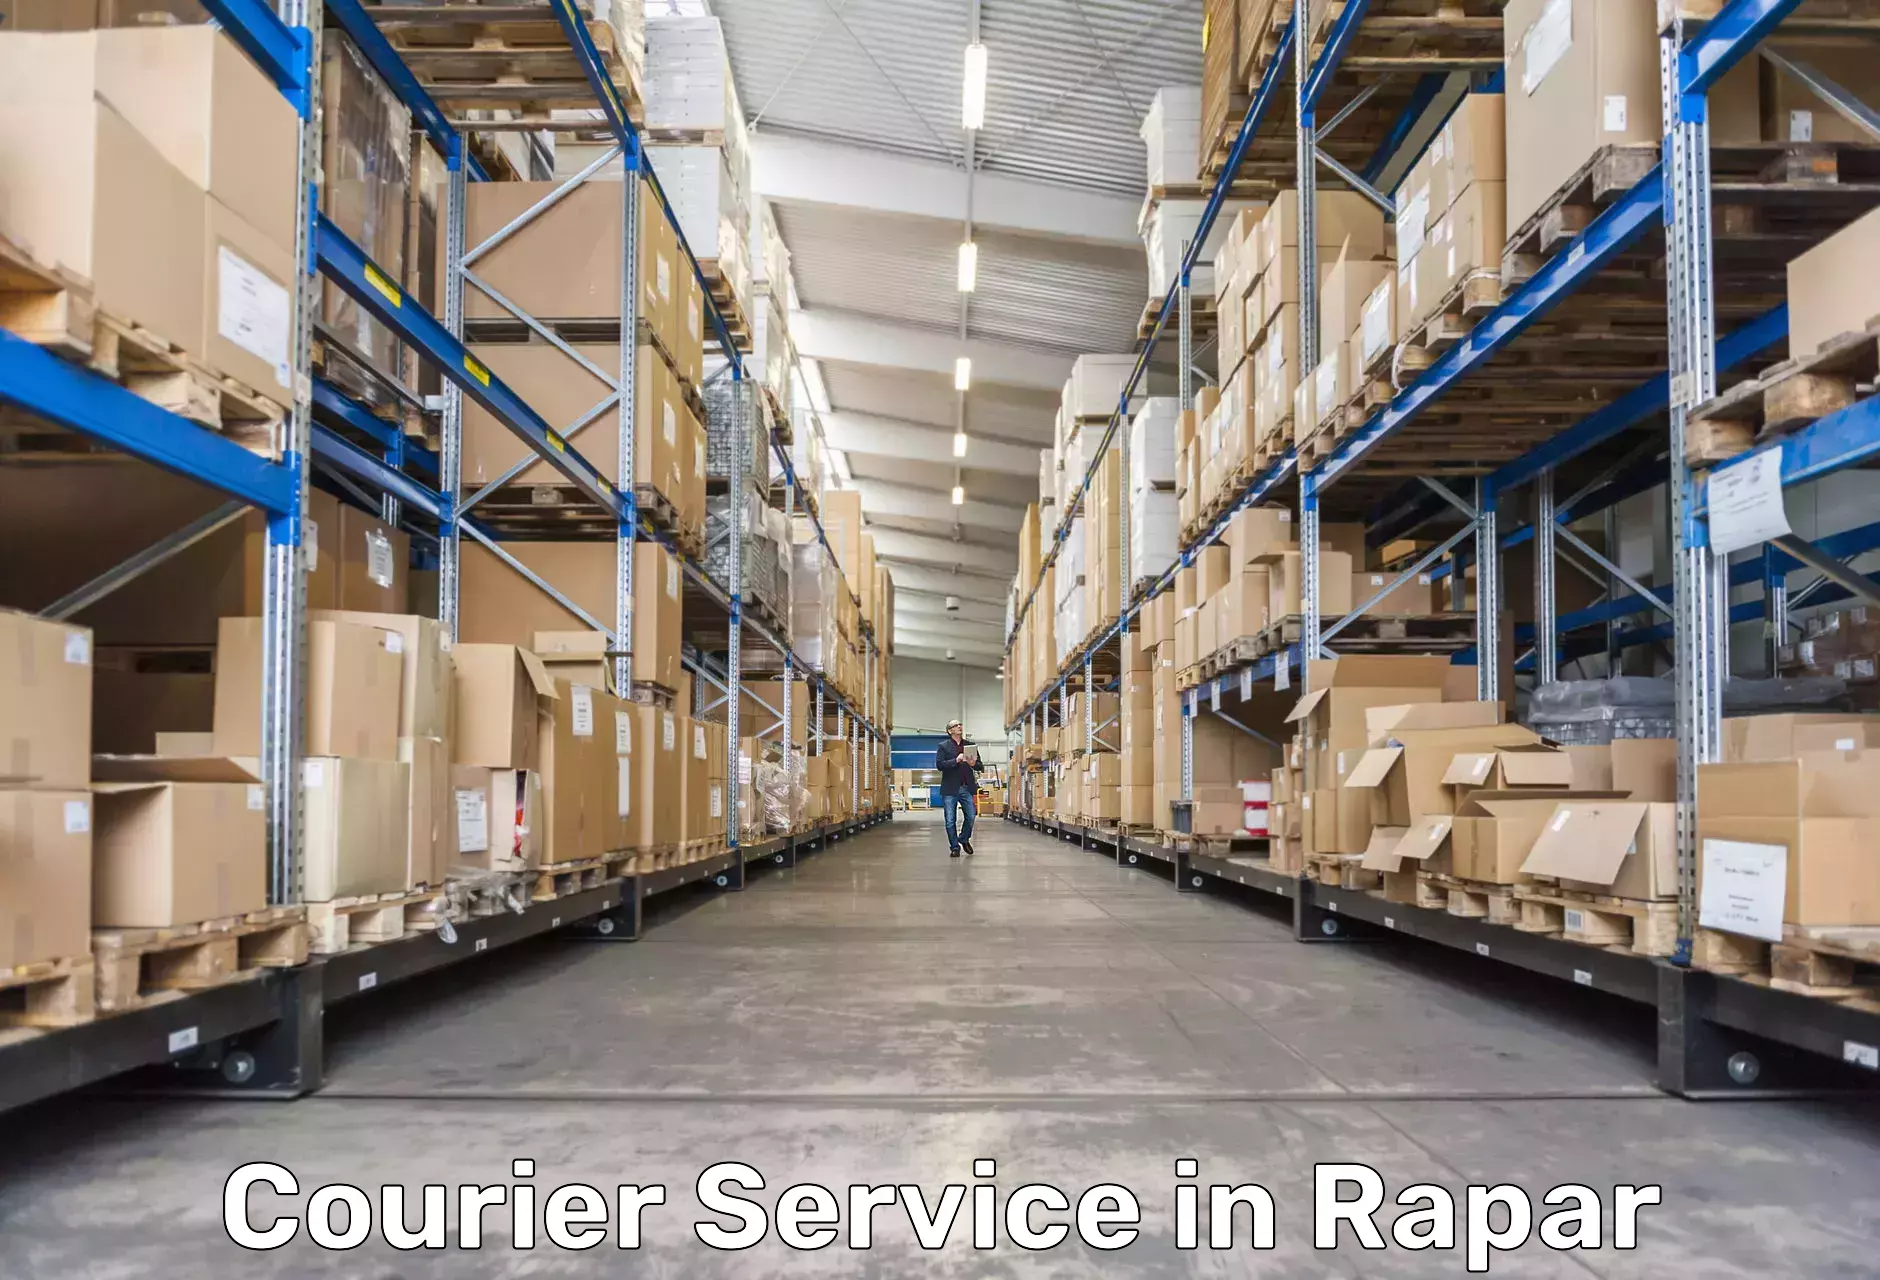 Dynamic parcel delivery in Rapar